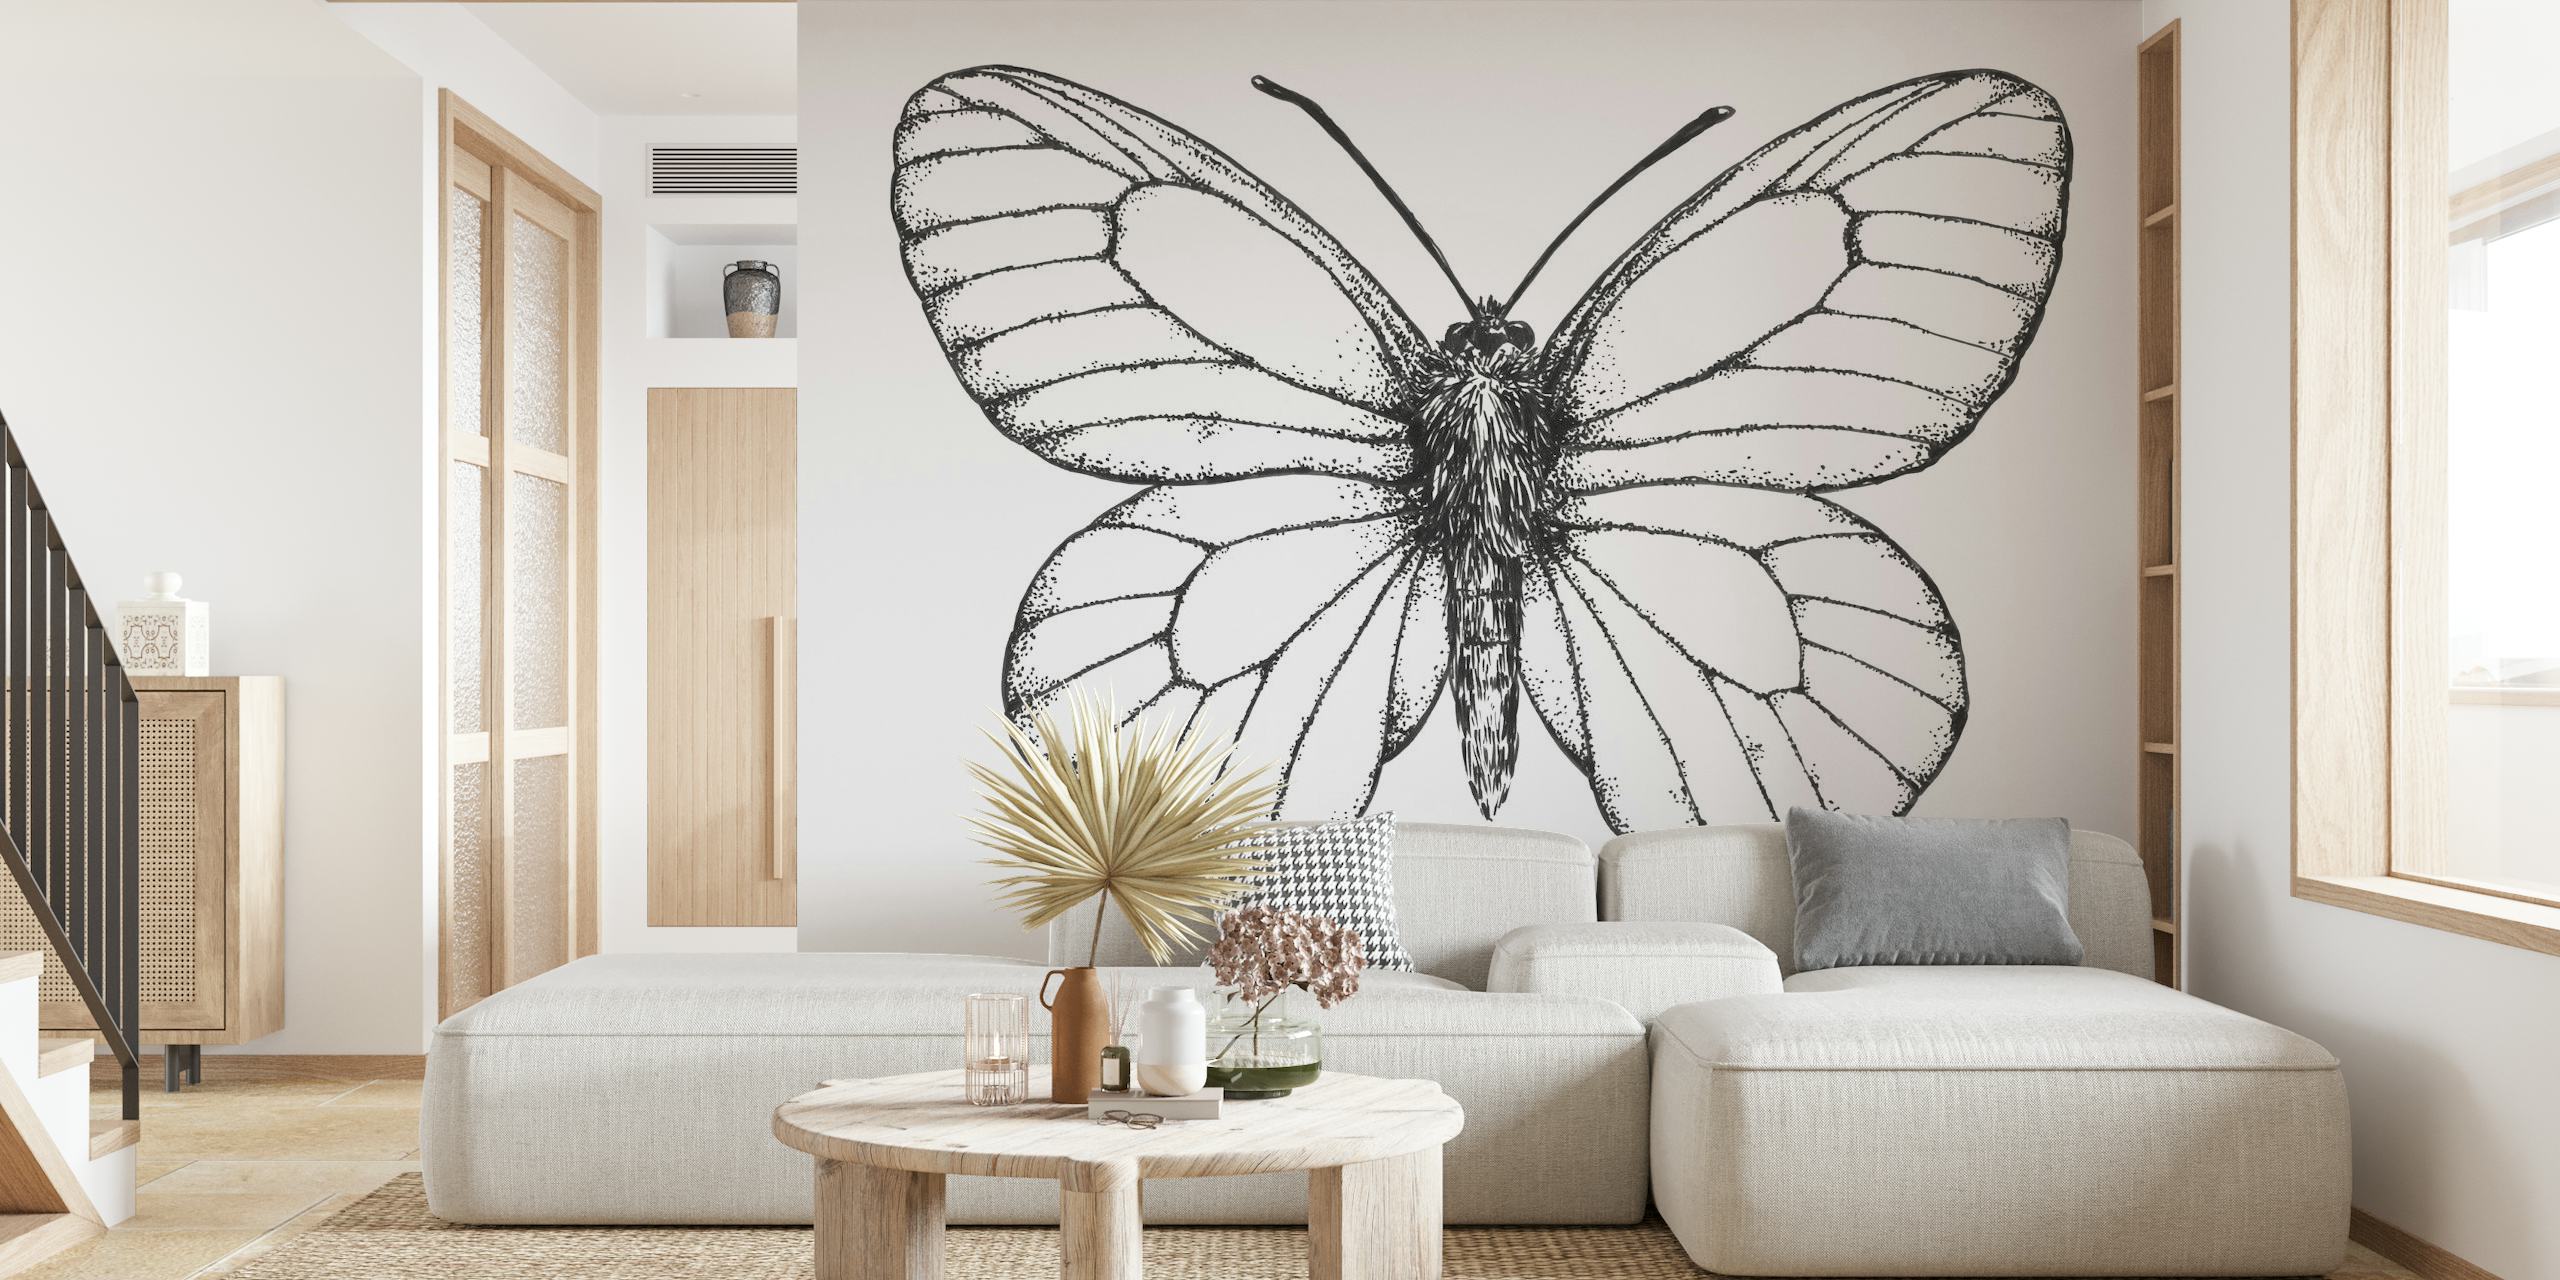 Black-veined butterfly wall mural design